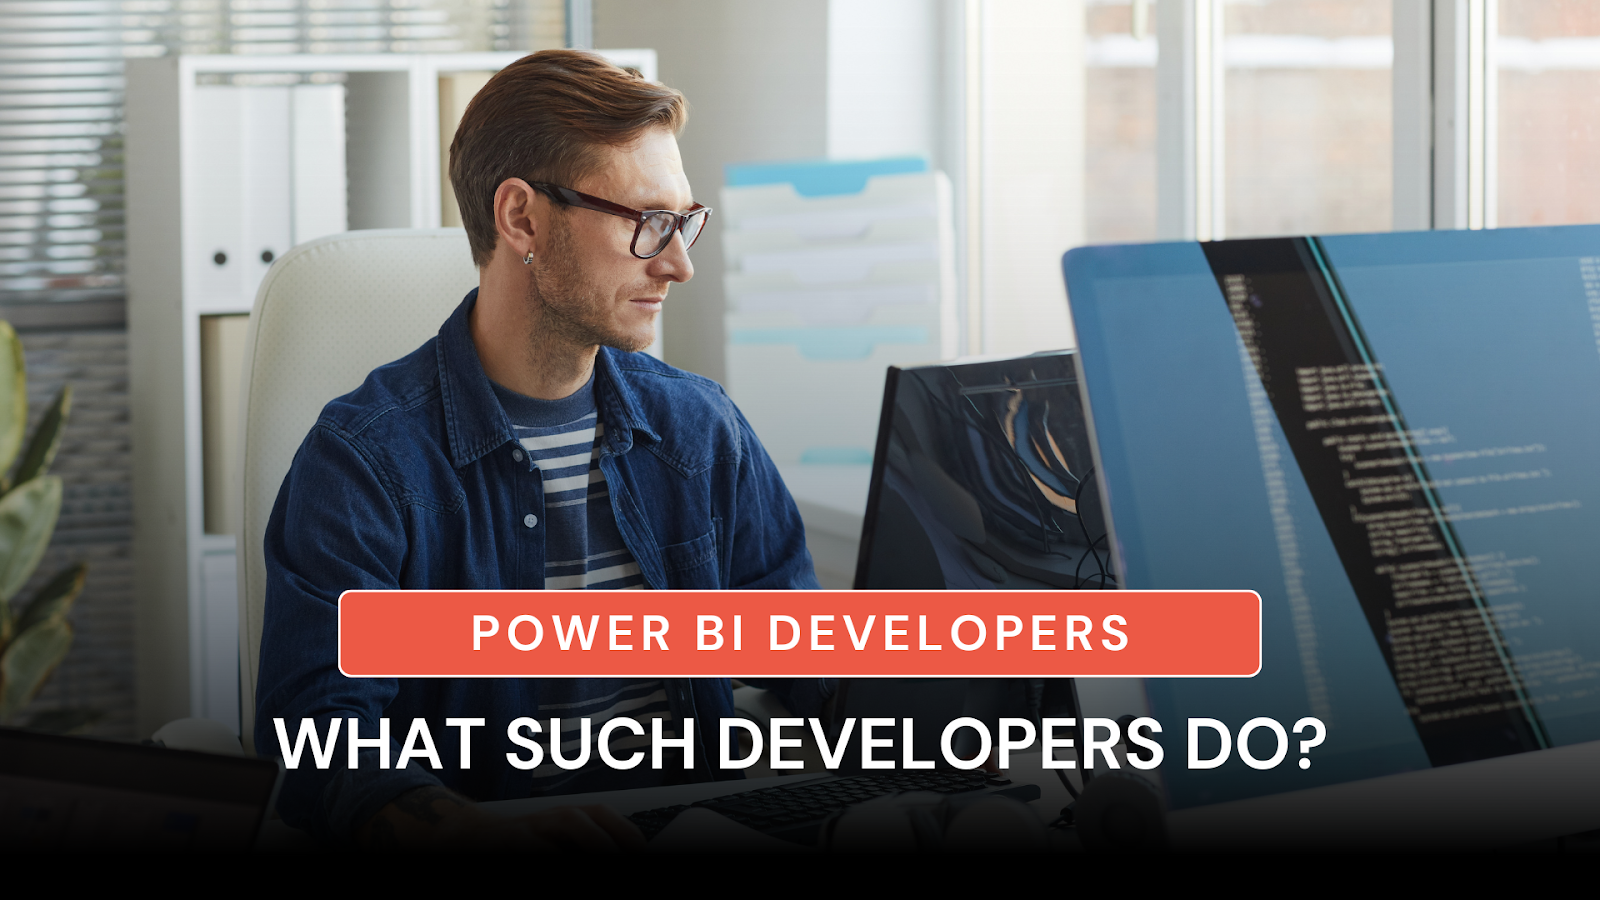 Power BI Developers